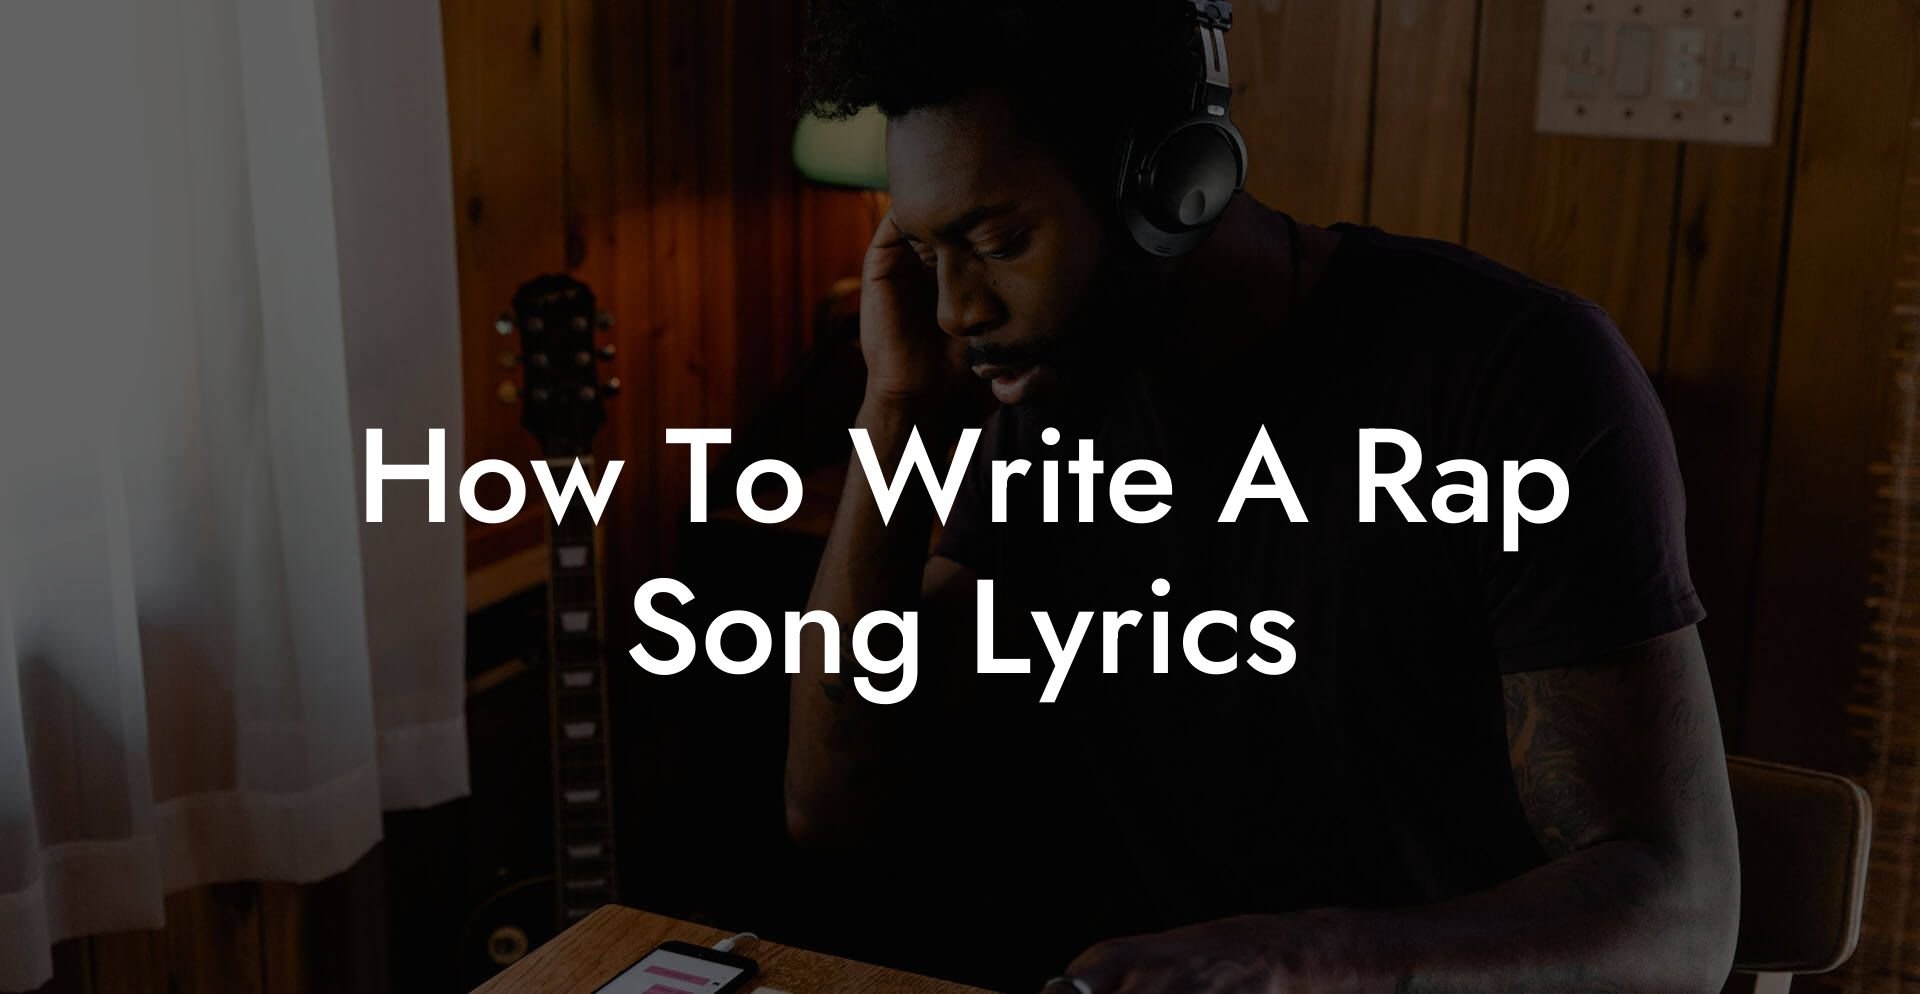 how to write a rap song lyrics lyric assistant